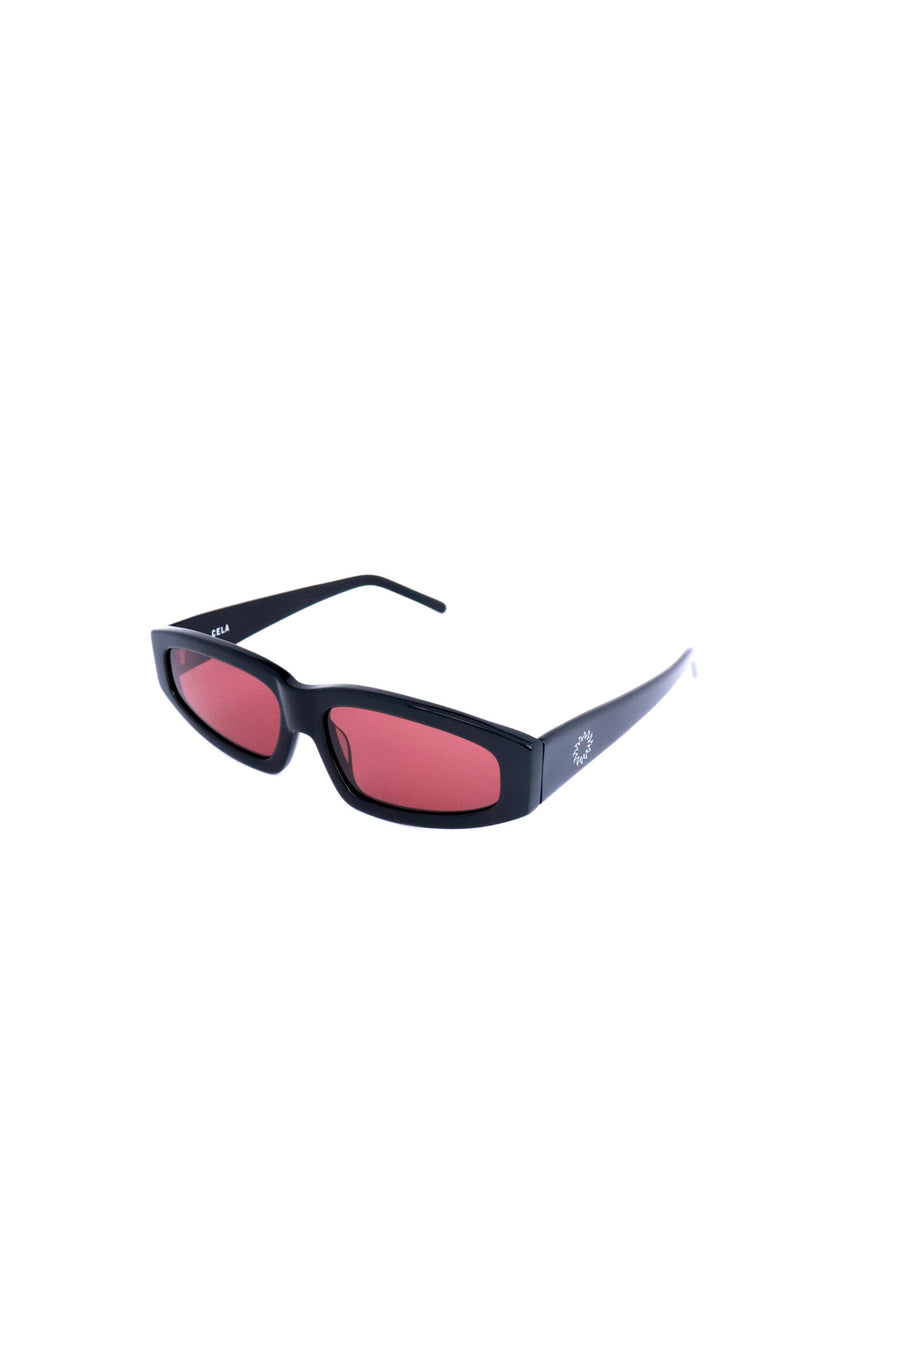 Avoir Eyewear - Cela in Midnight Black with Red lens - Sunglasses